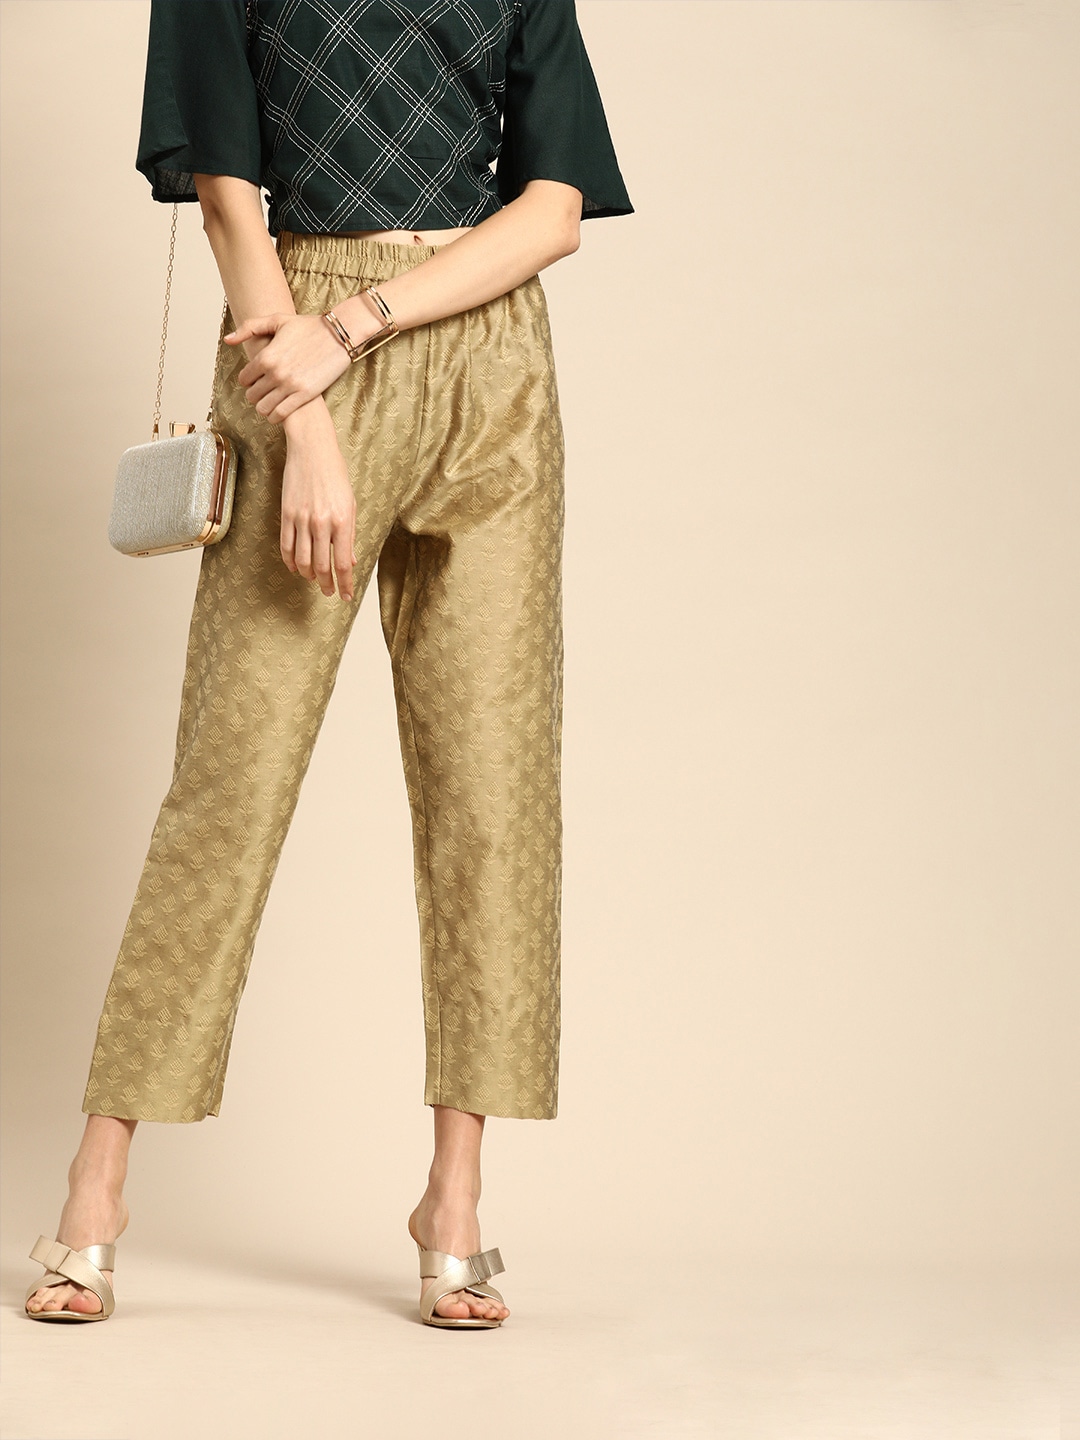 Varanga Women Golden & Beige Woven Design Cropped Trousers Price in India